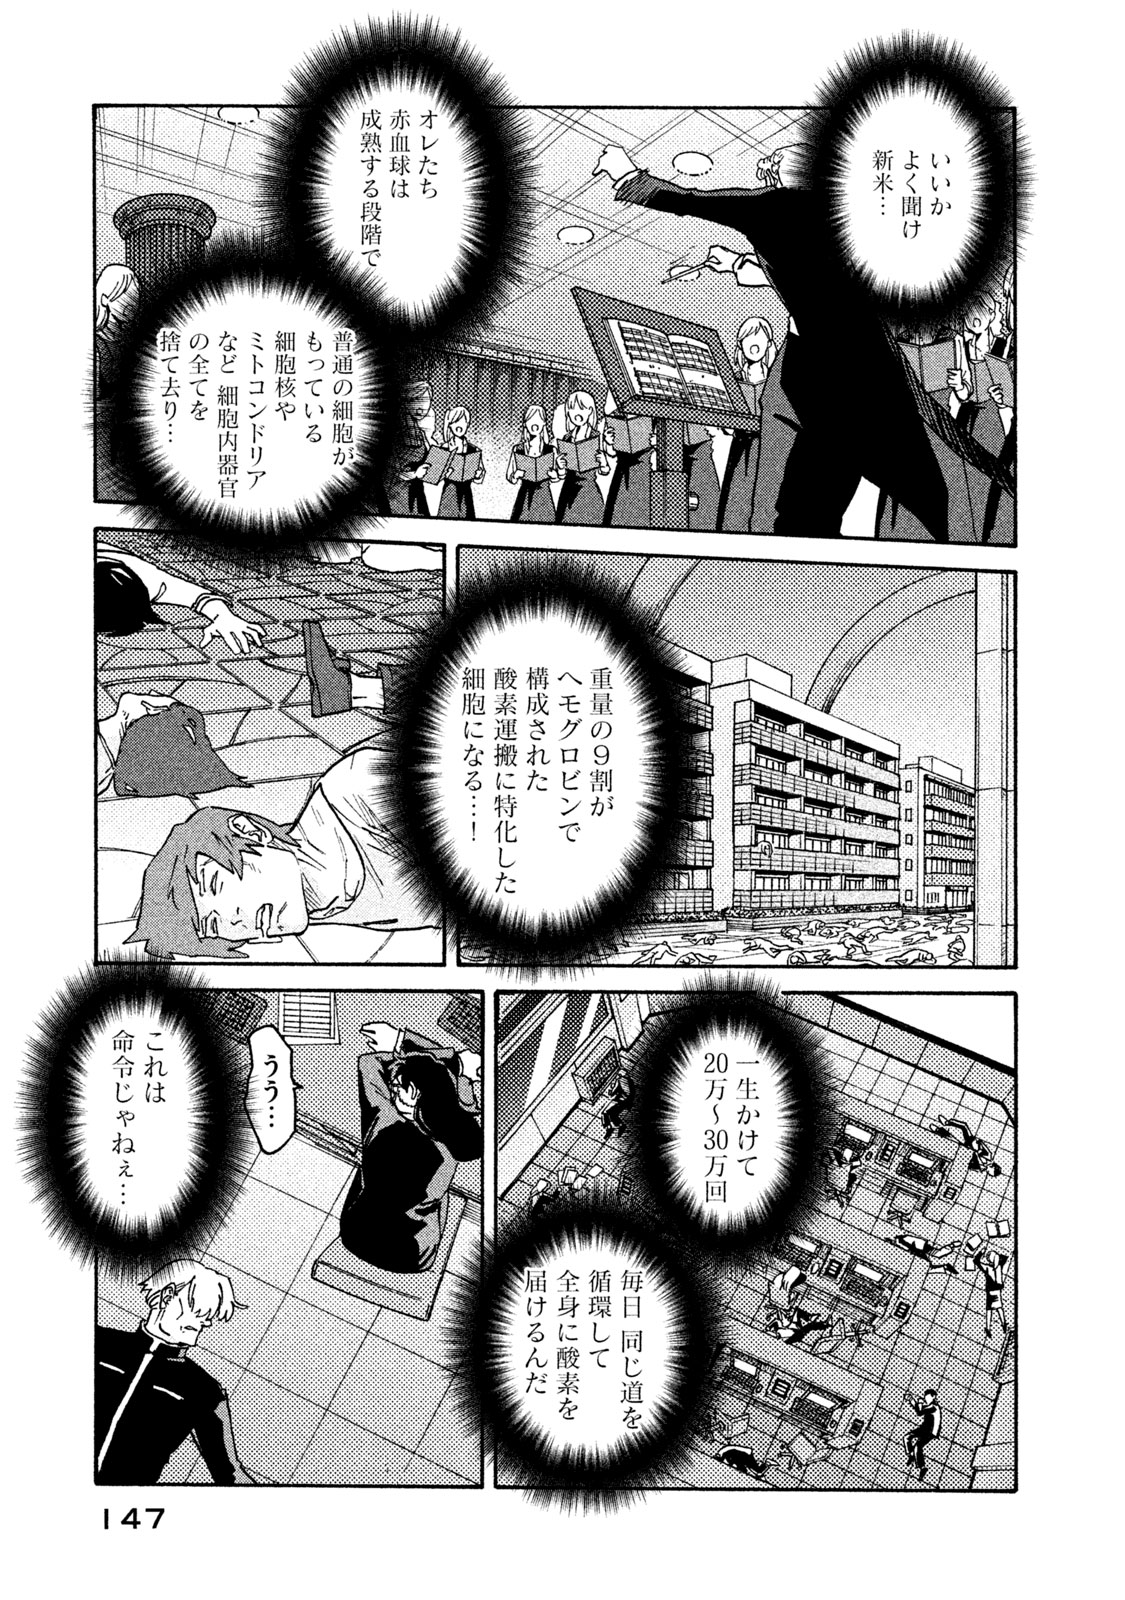 Hataraku Saibou BLACK - Chapter 31 - Page 23